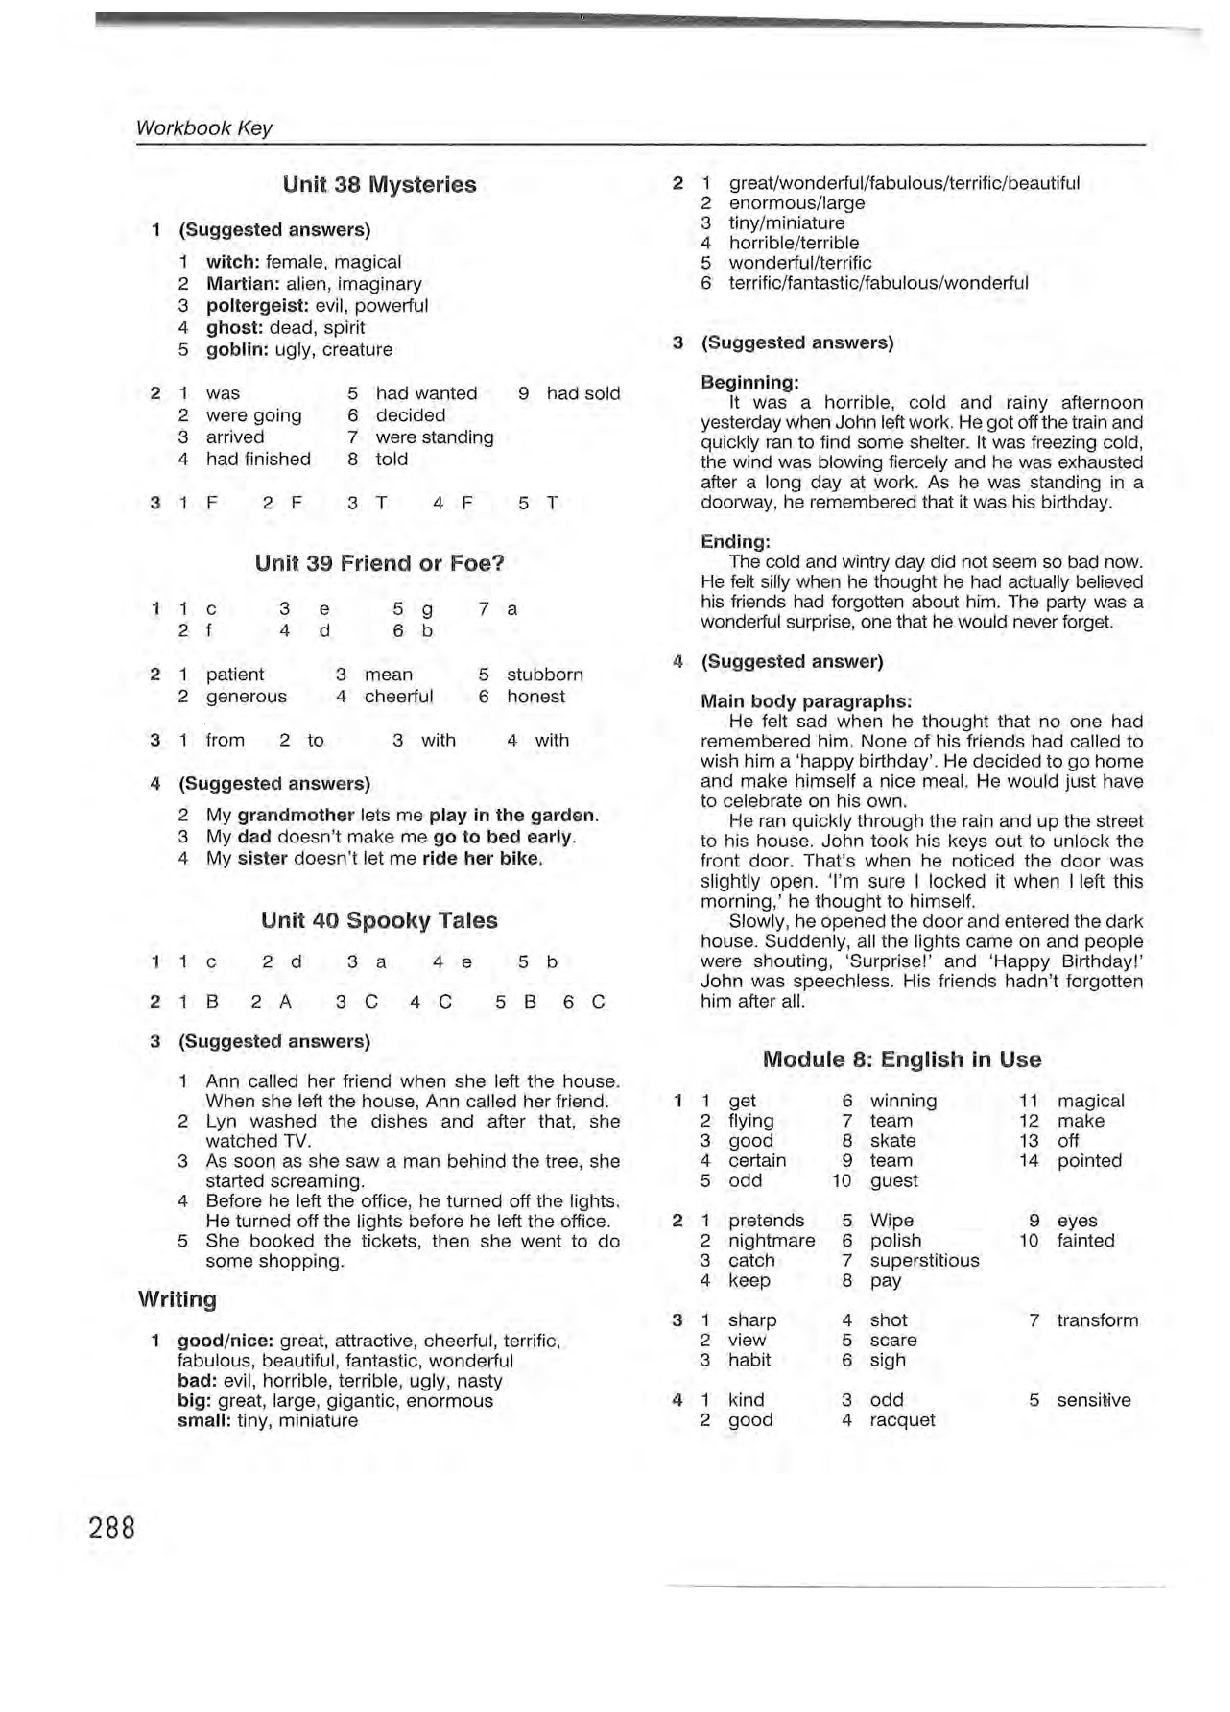 BlockBuster 3 Workbook & Grammar